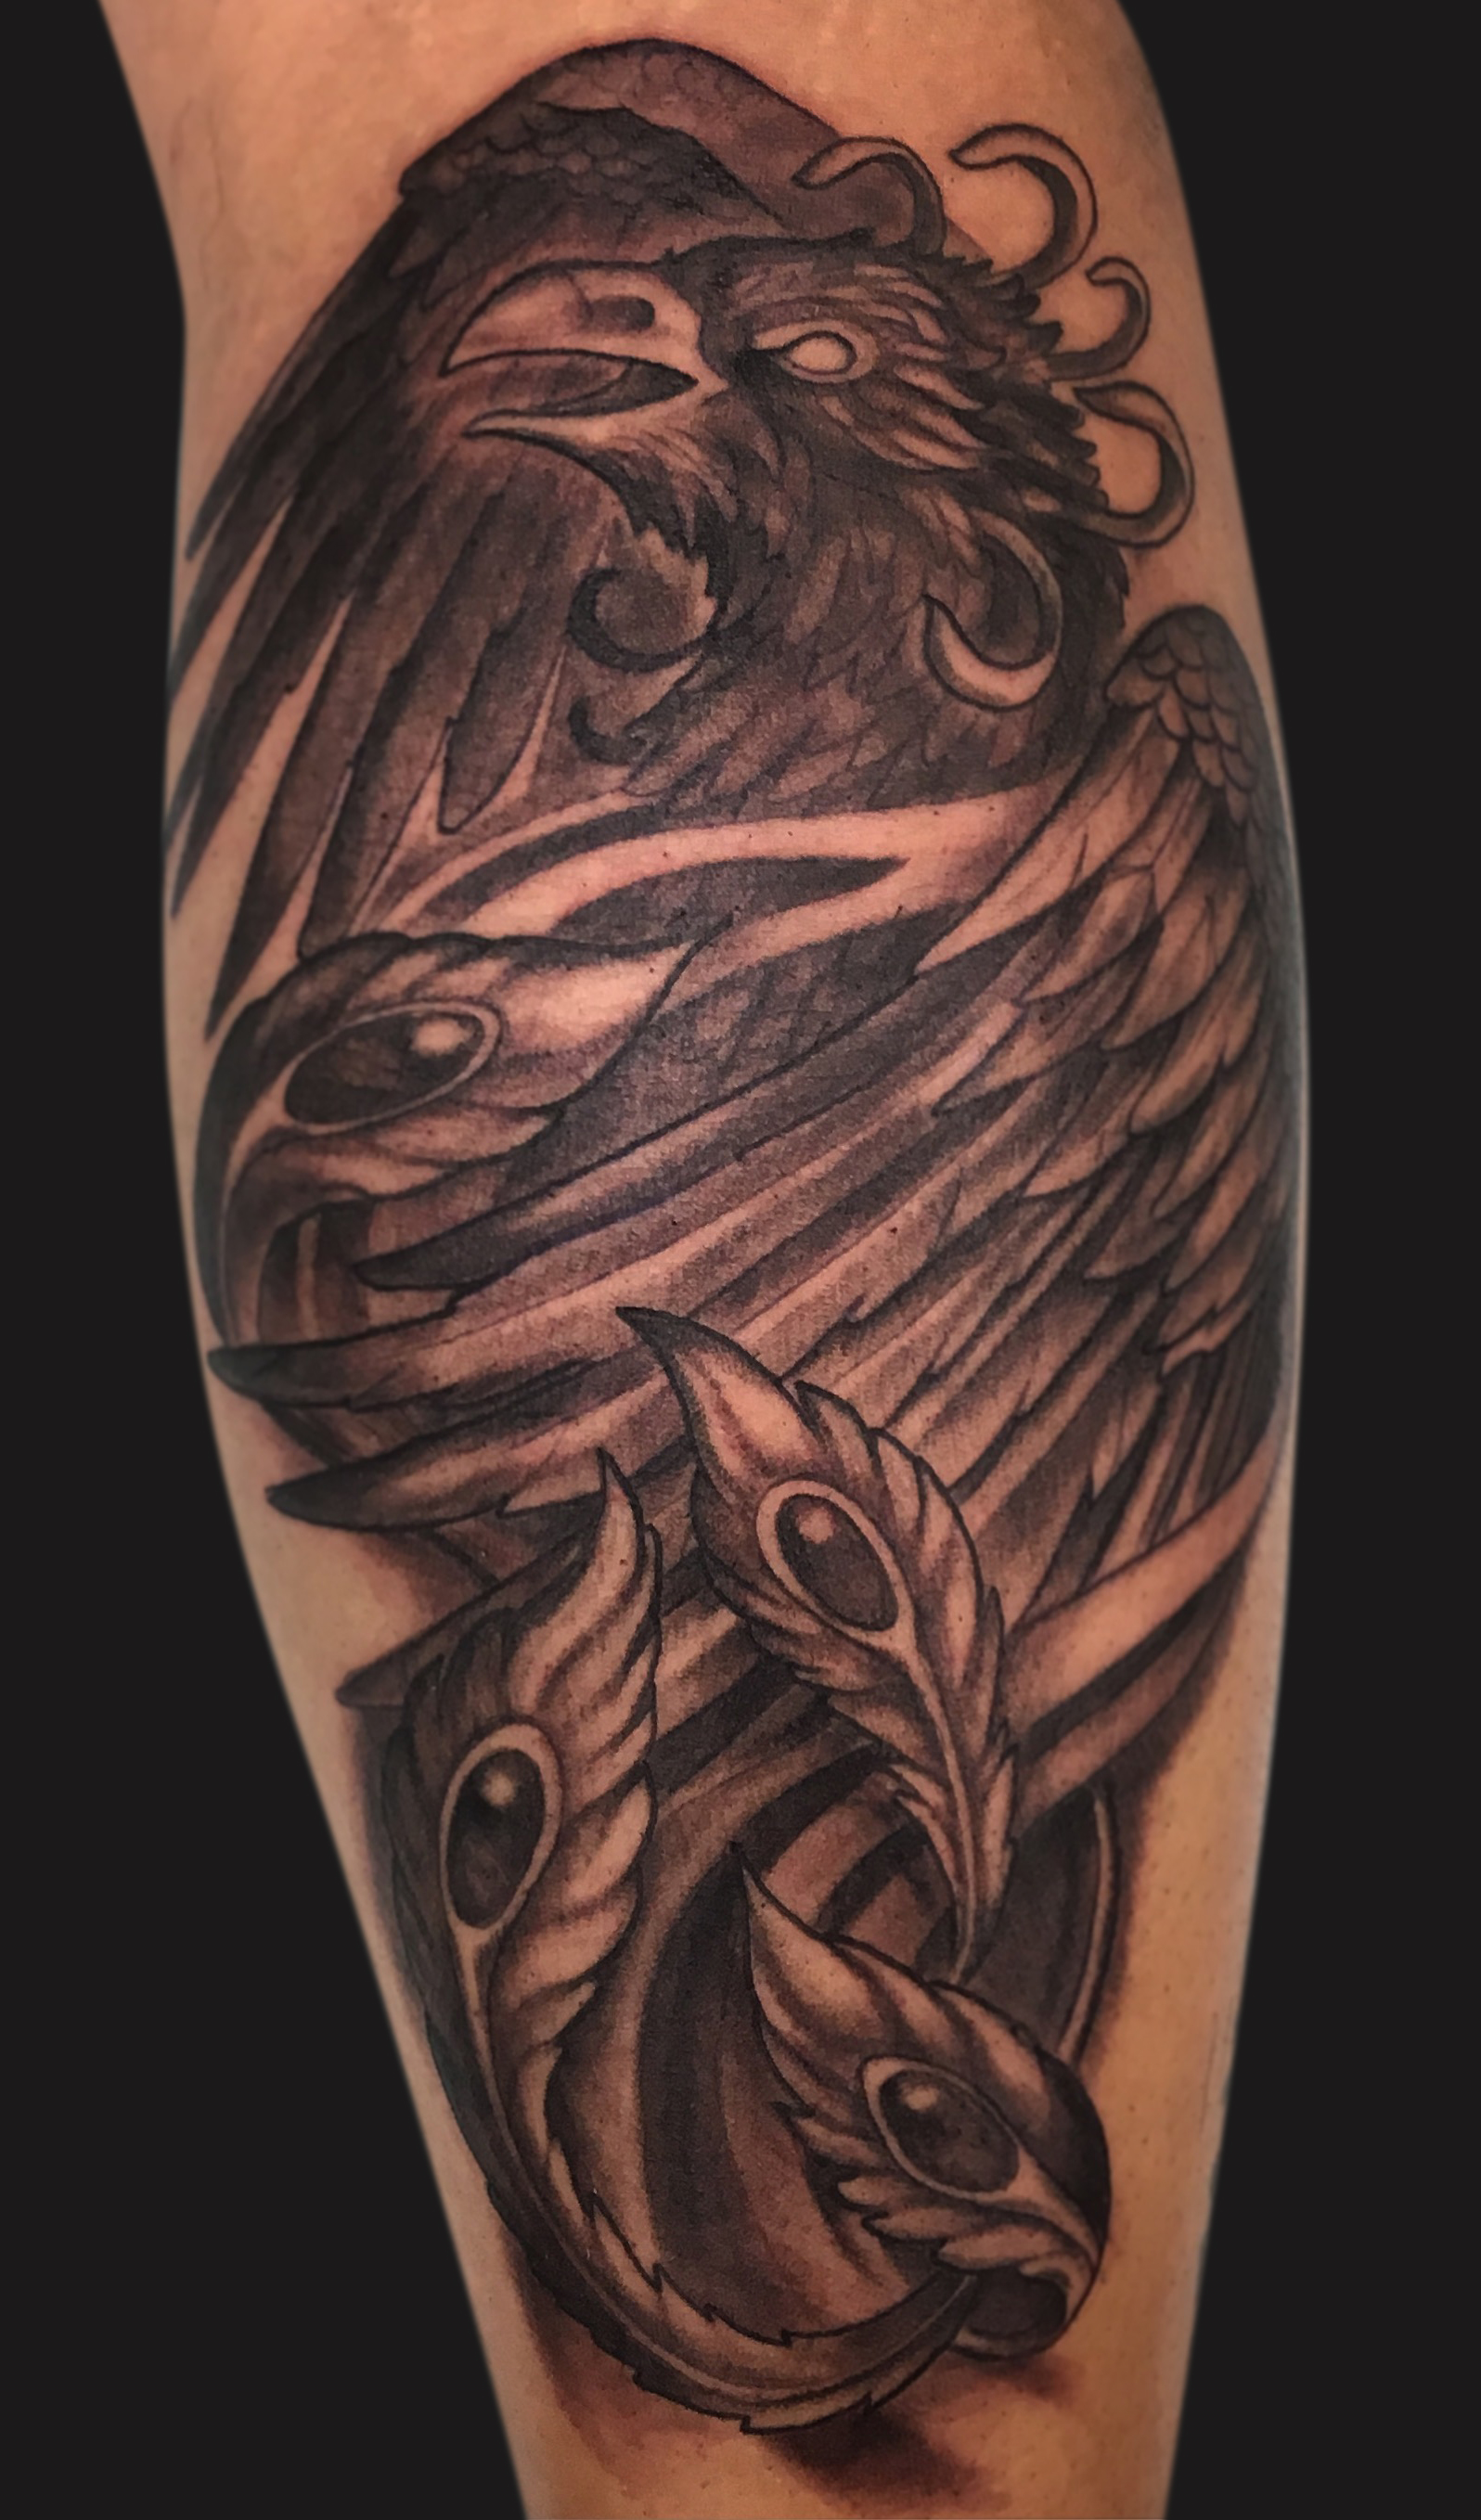 Black Ink Phoenix Tattoo Design For Leg Calf By Spencer Caligiuri